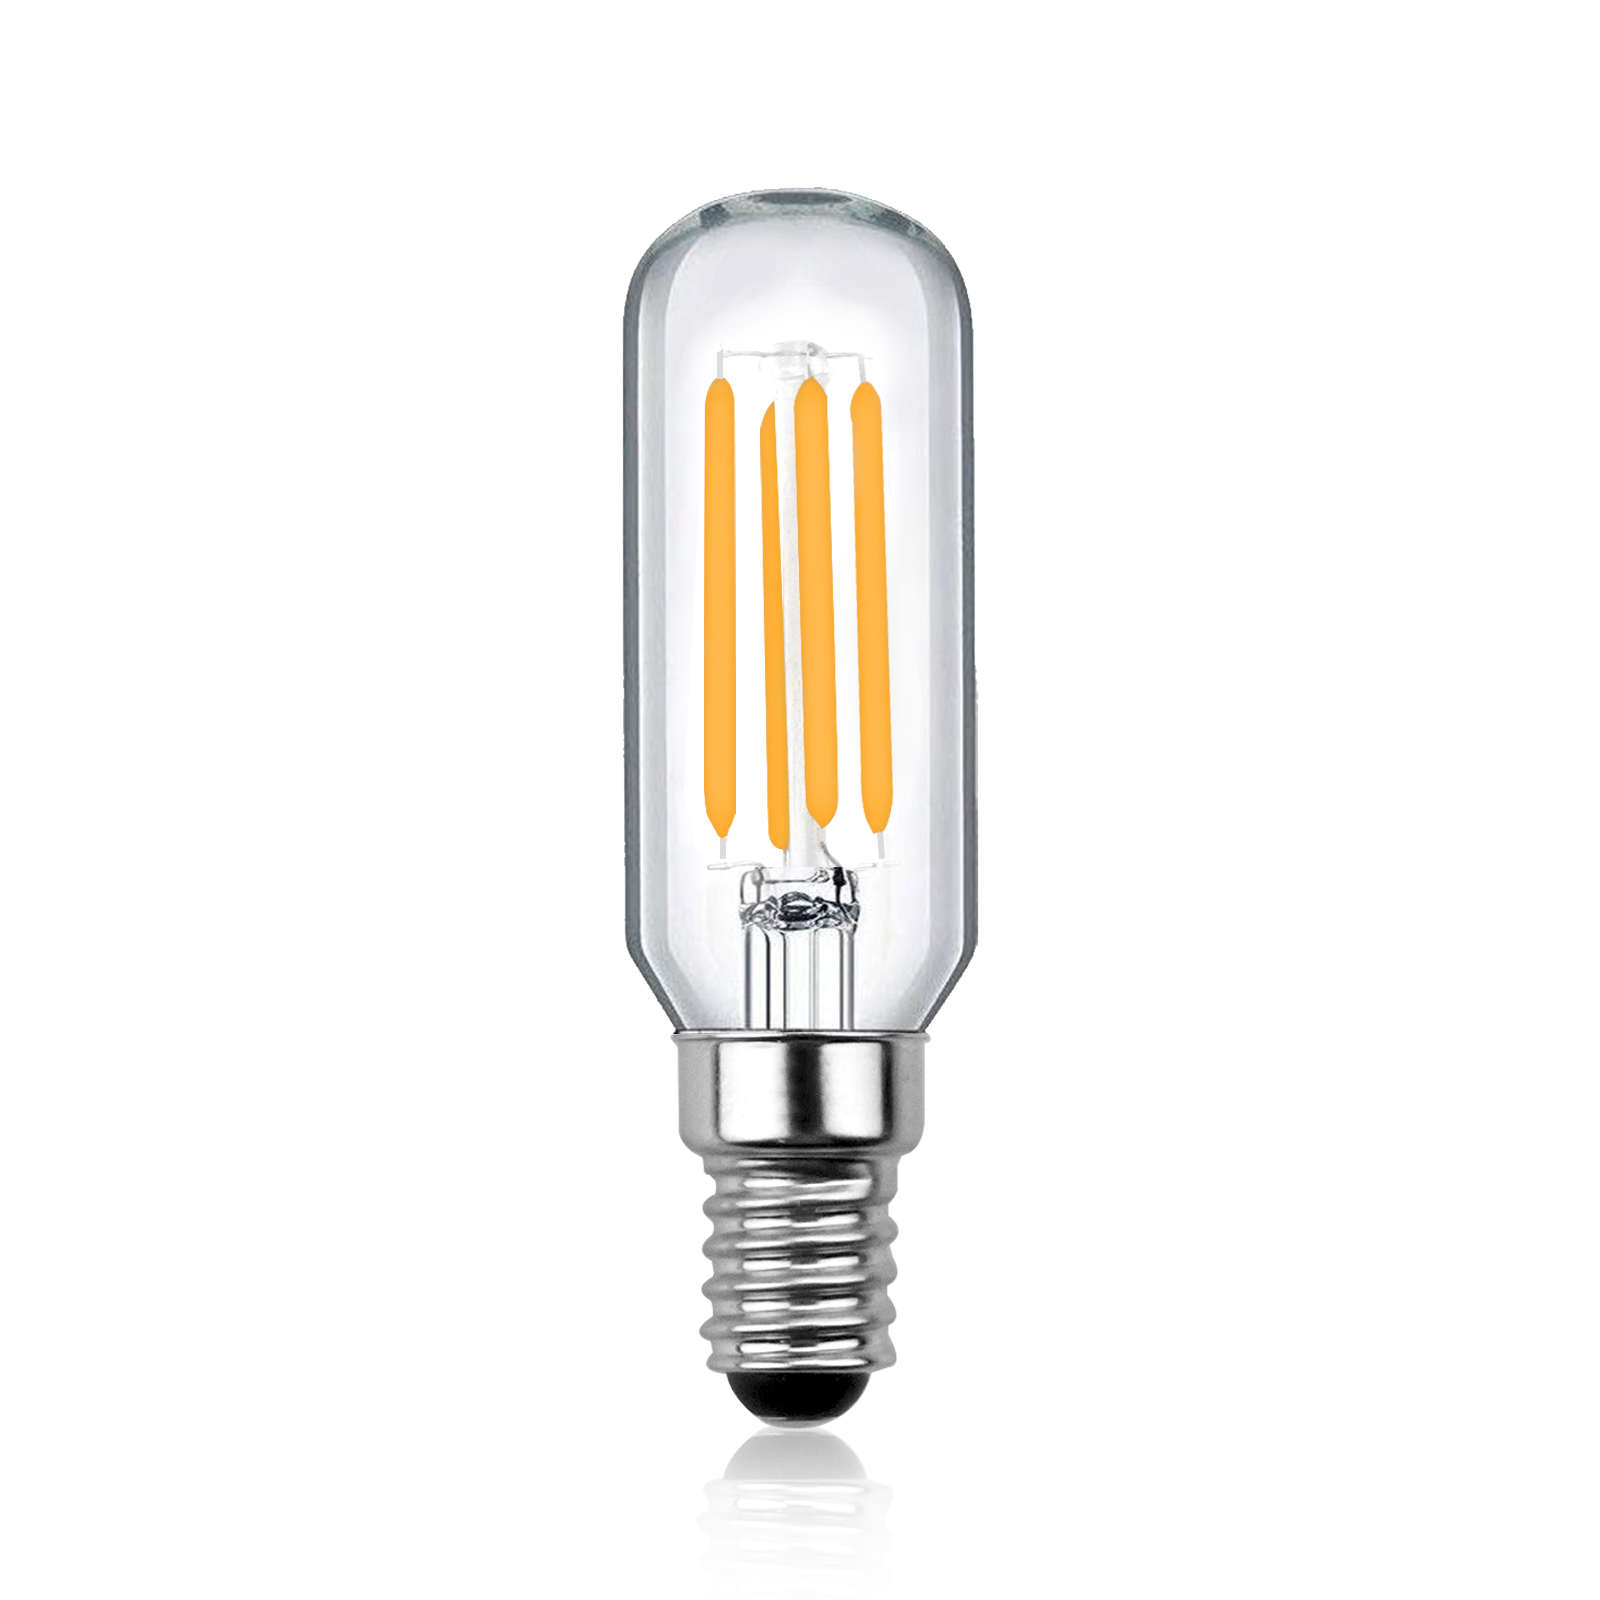 tuberkulose Smigre Hals 4W T25 E14 LED Vintage Light Bulb| Lusta LED